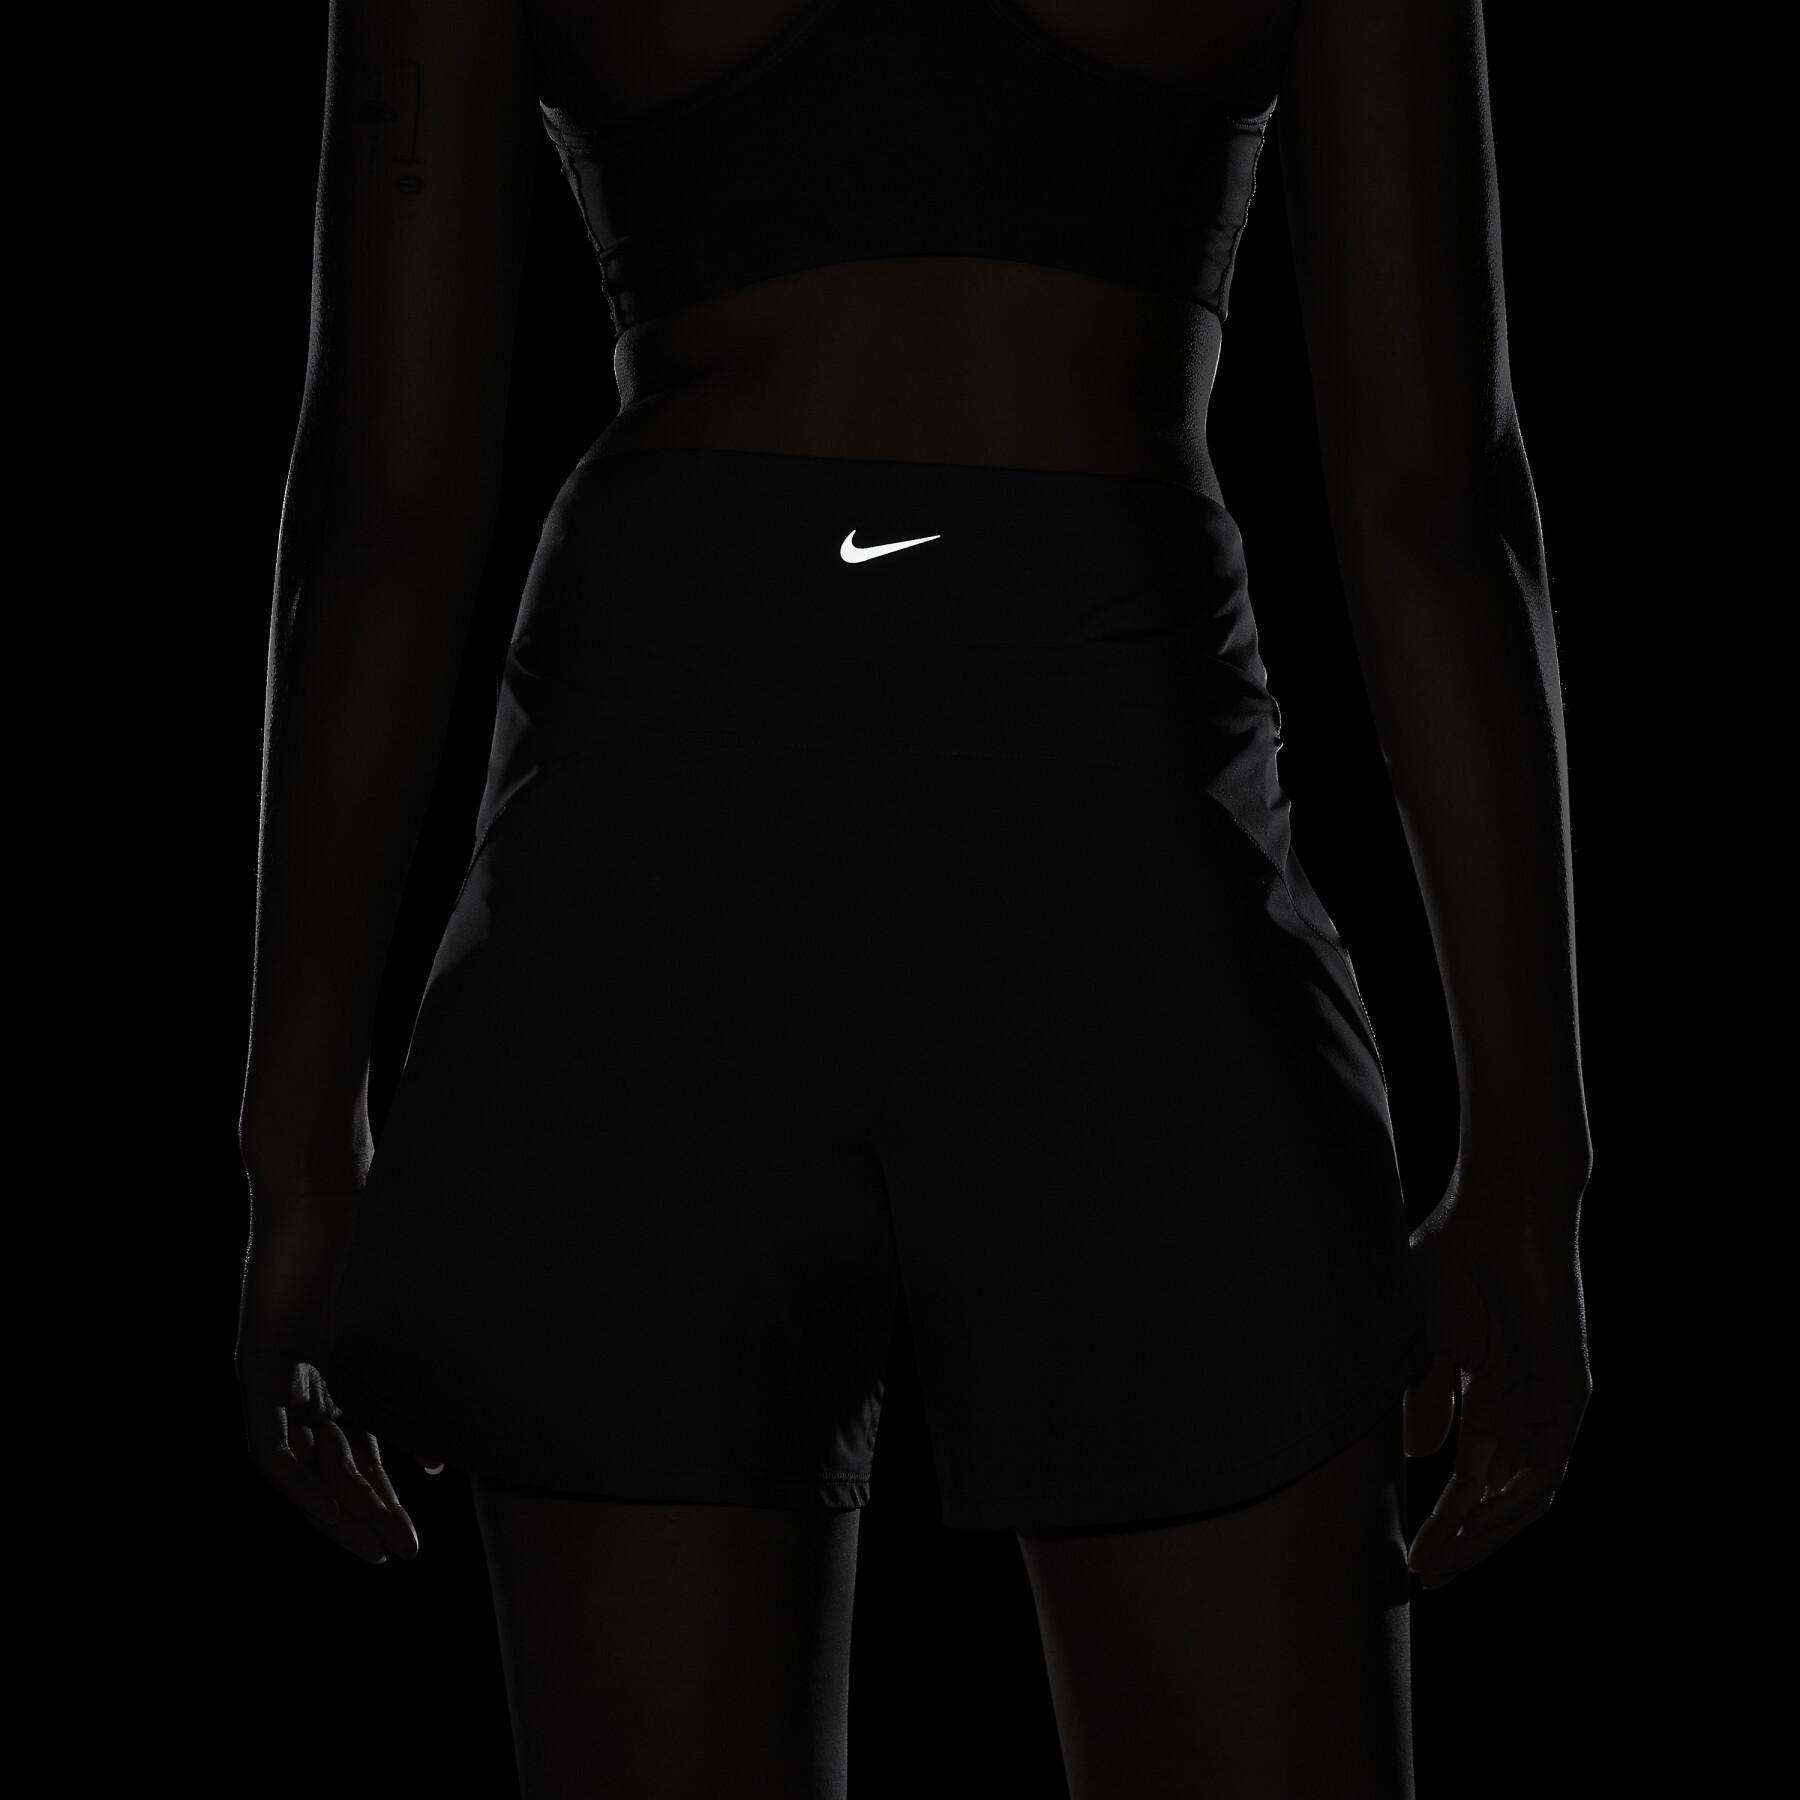 Women's shorts Nike Bliss Dri-Fit MR 5 " BR